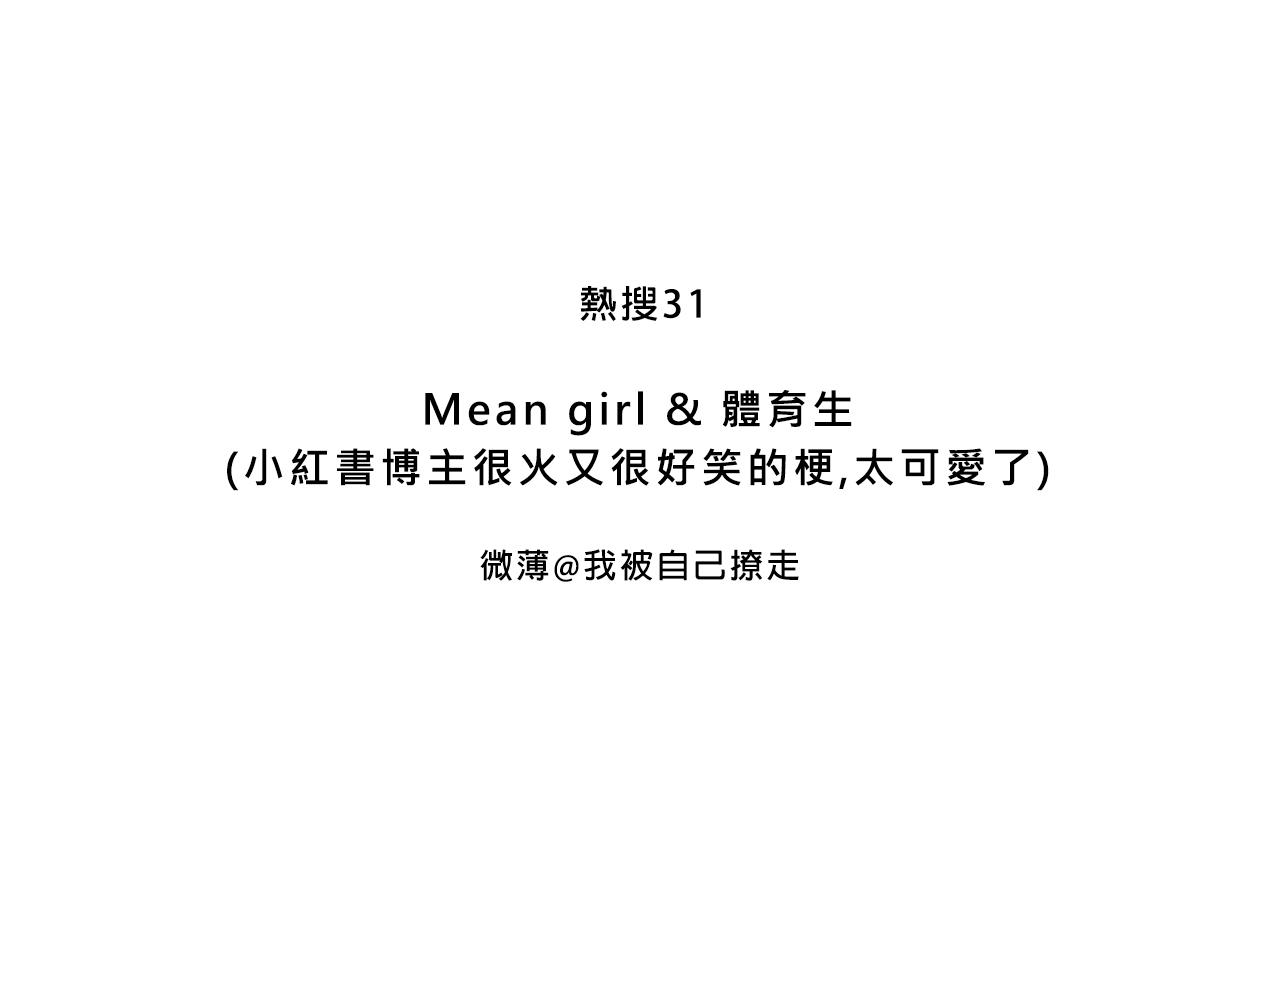 Mean girls又甜又茶的富家女 - Mean girl &體育生 - 3